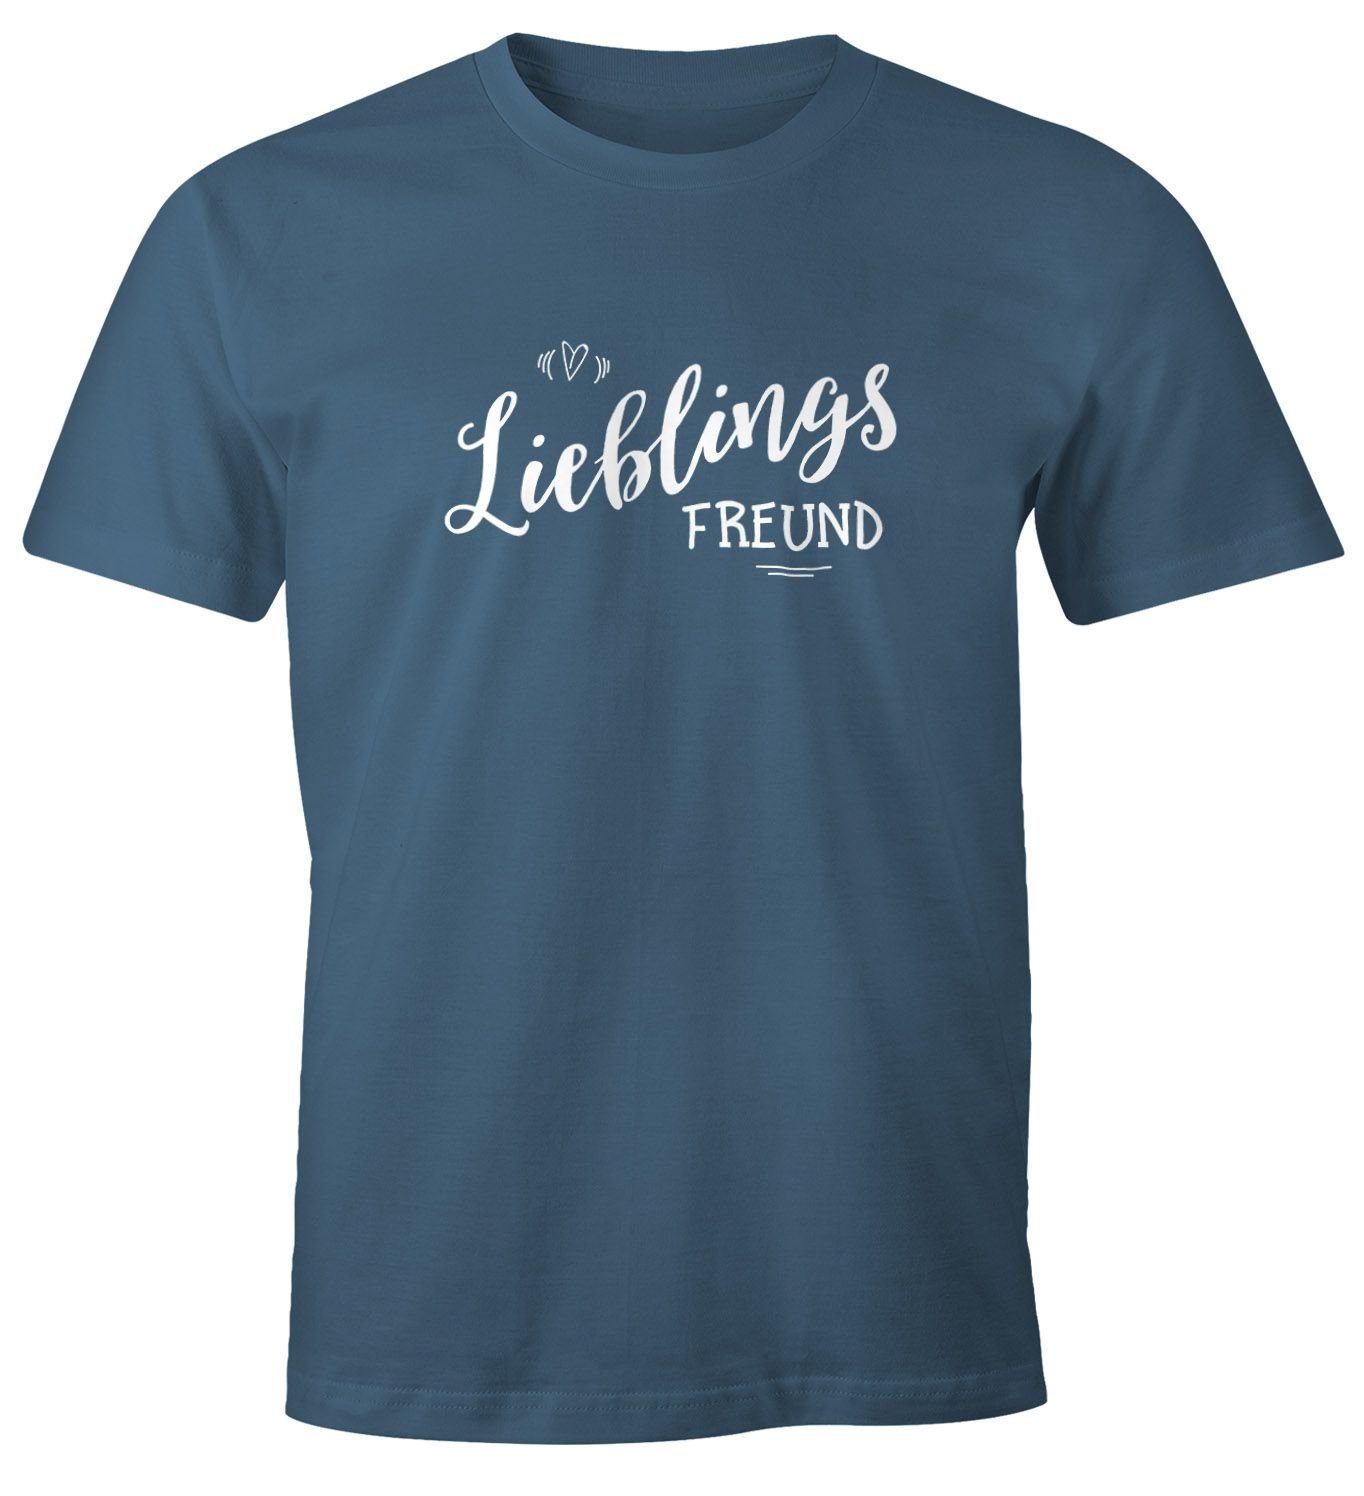 MoonWorks Print-Shirt Herren T-Shirt Lieblingsfreund Geschenk Freundschaft Partner Freund Liebe Moonworks® mit Print blau